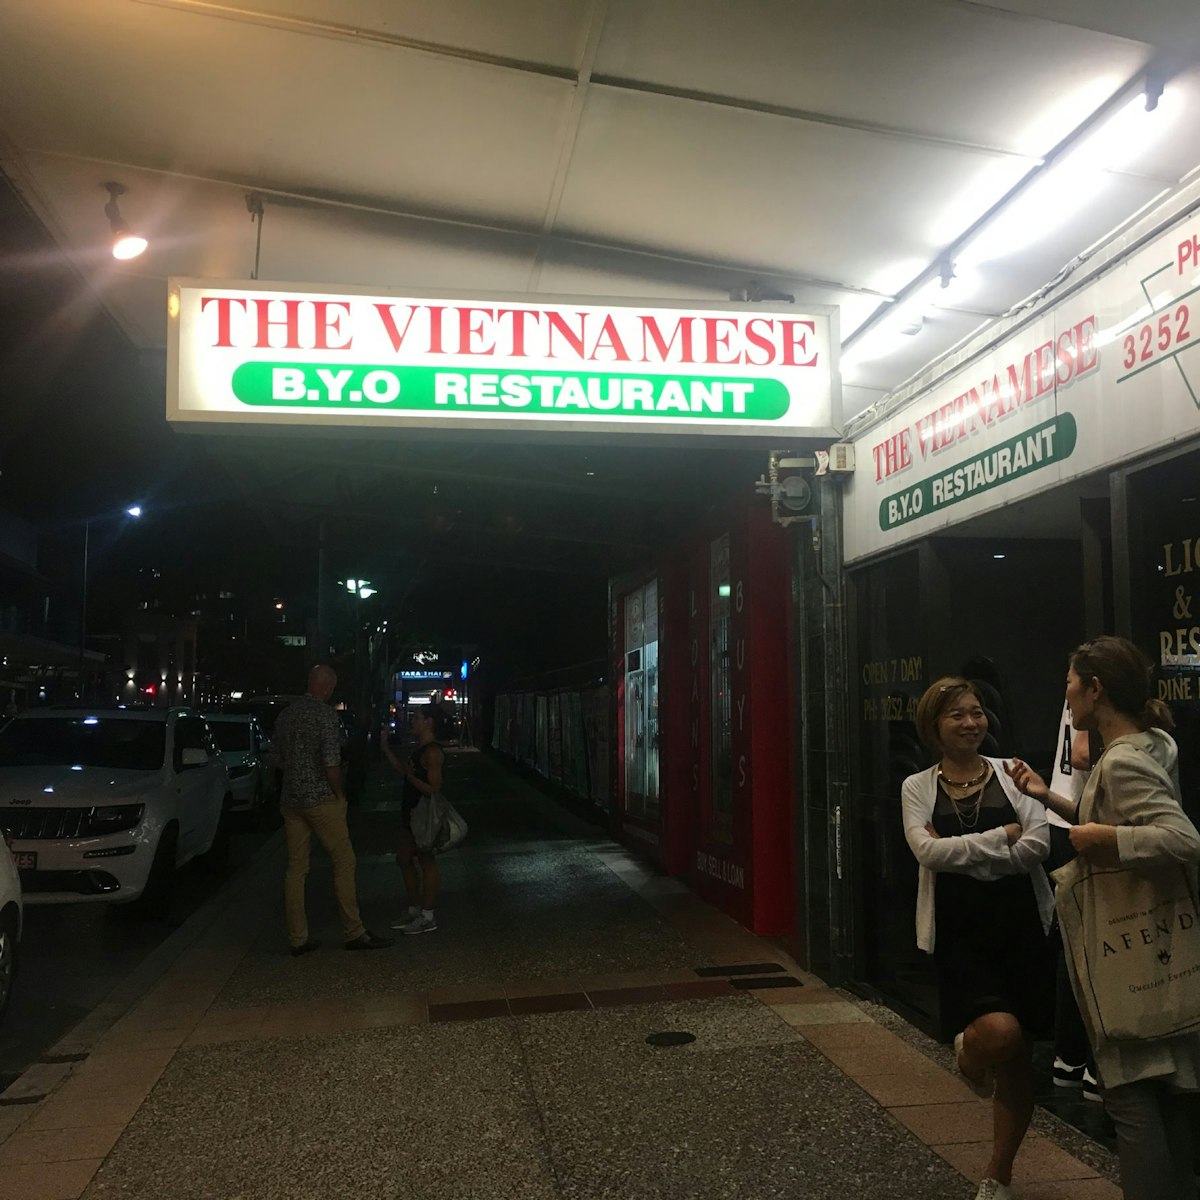 The Vietnamese exterior